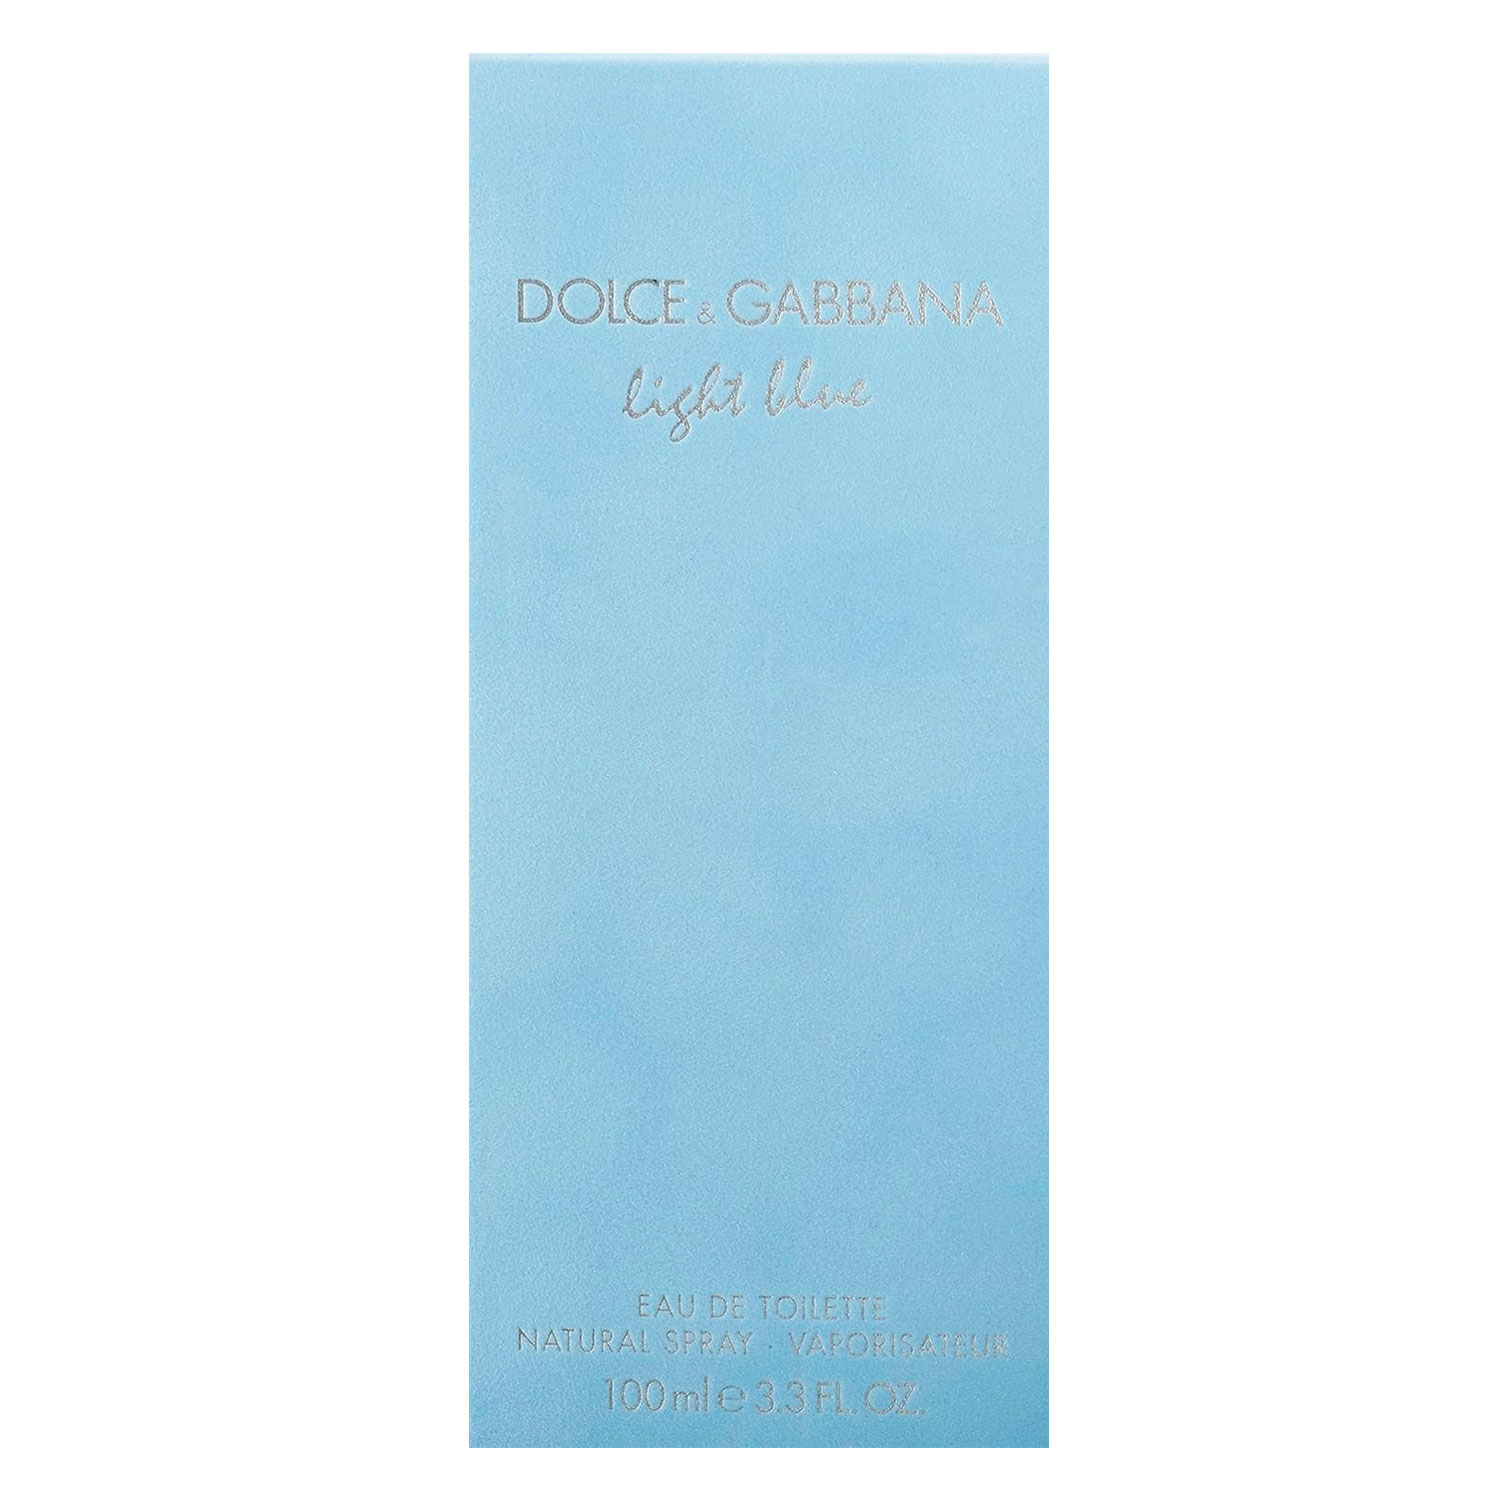 Perfume Dolce Gabbana Light Blue Eau de Toilette Feminino 100ml